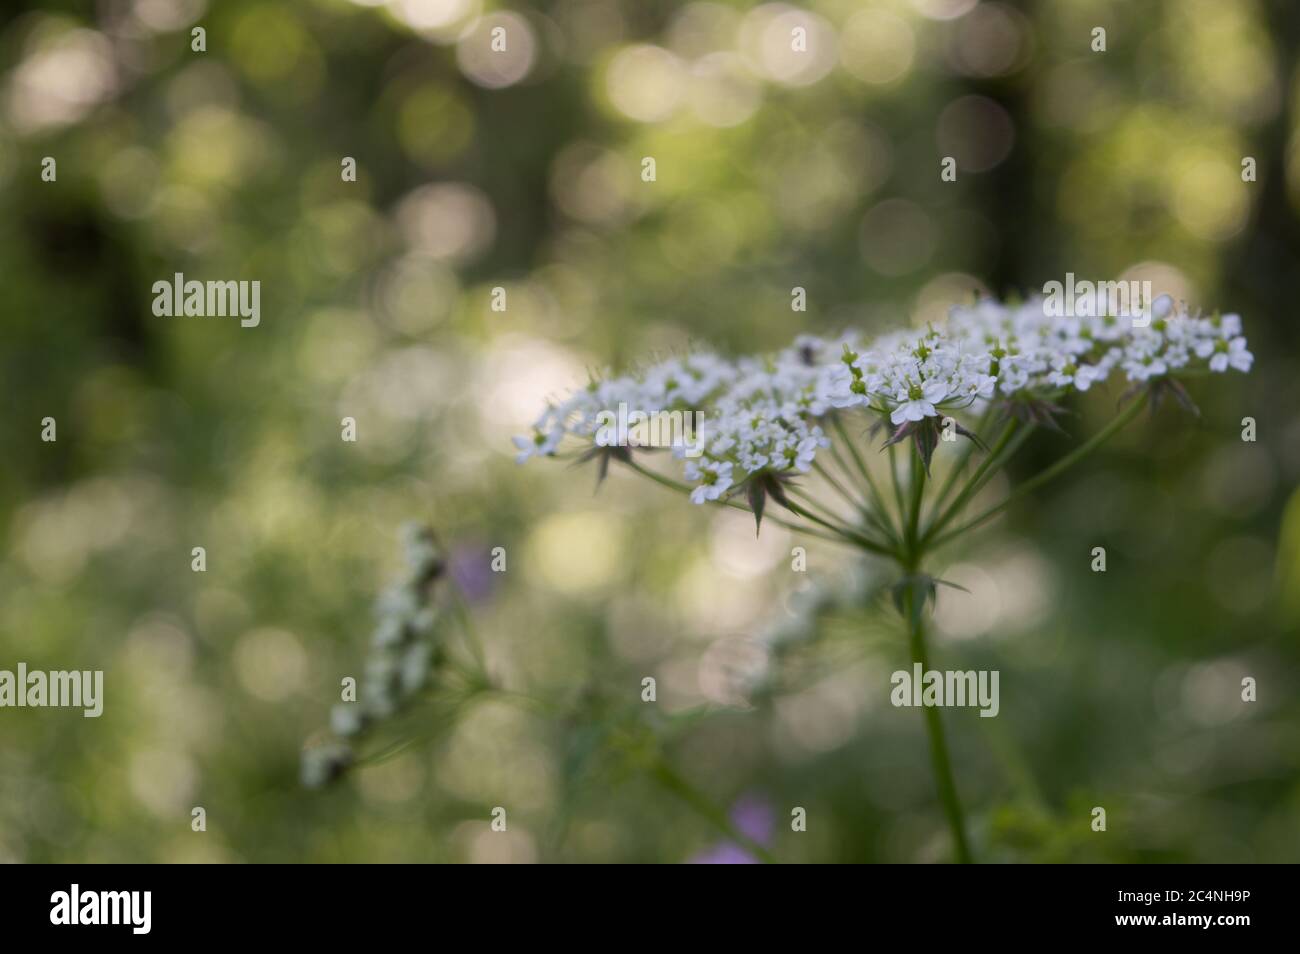 Blooming common yarrow, Achillea millefolium in the nature, soft focus Stock Photo